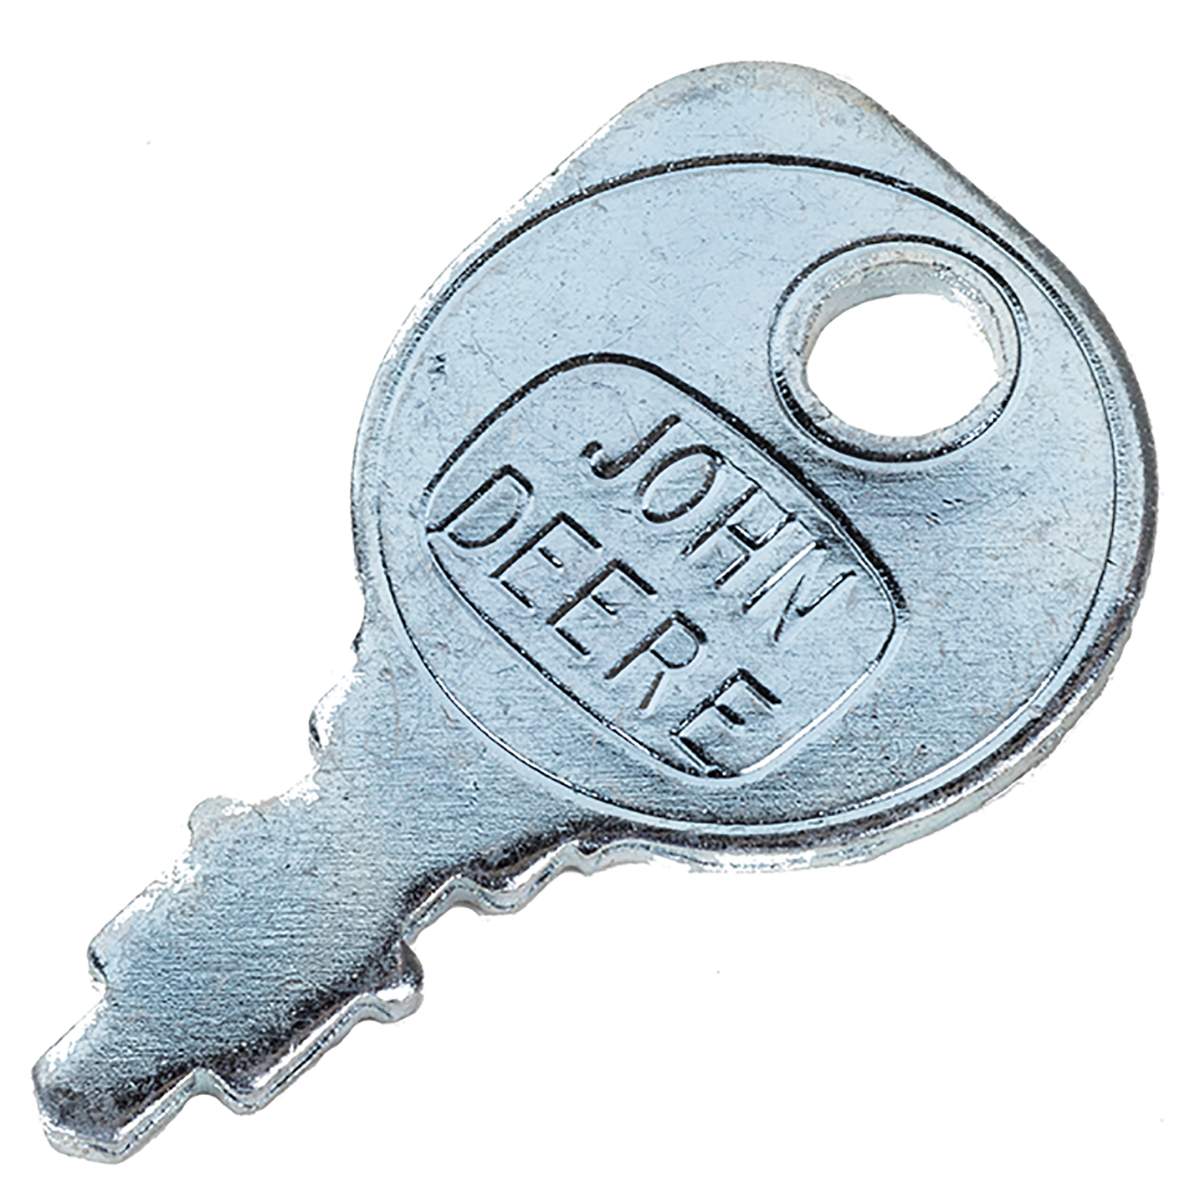  John Deere Original Equipment Key - M40718 : Patio, Lawn &  Garden